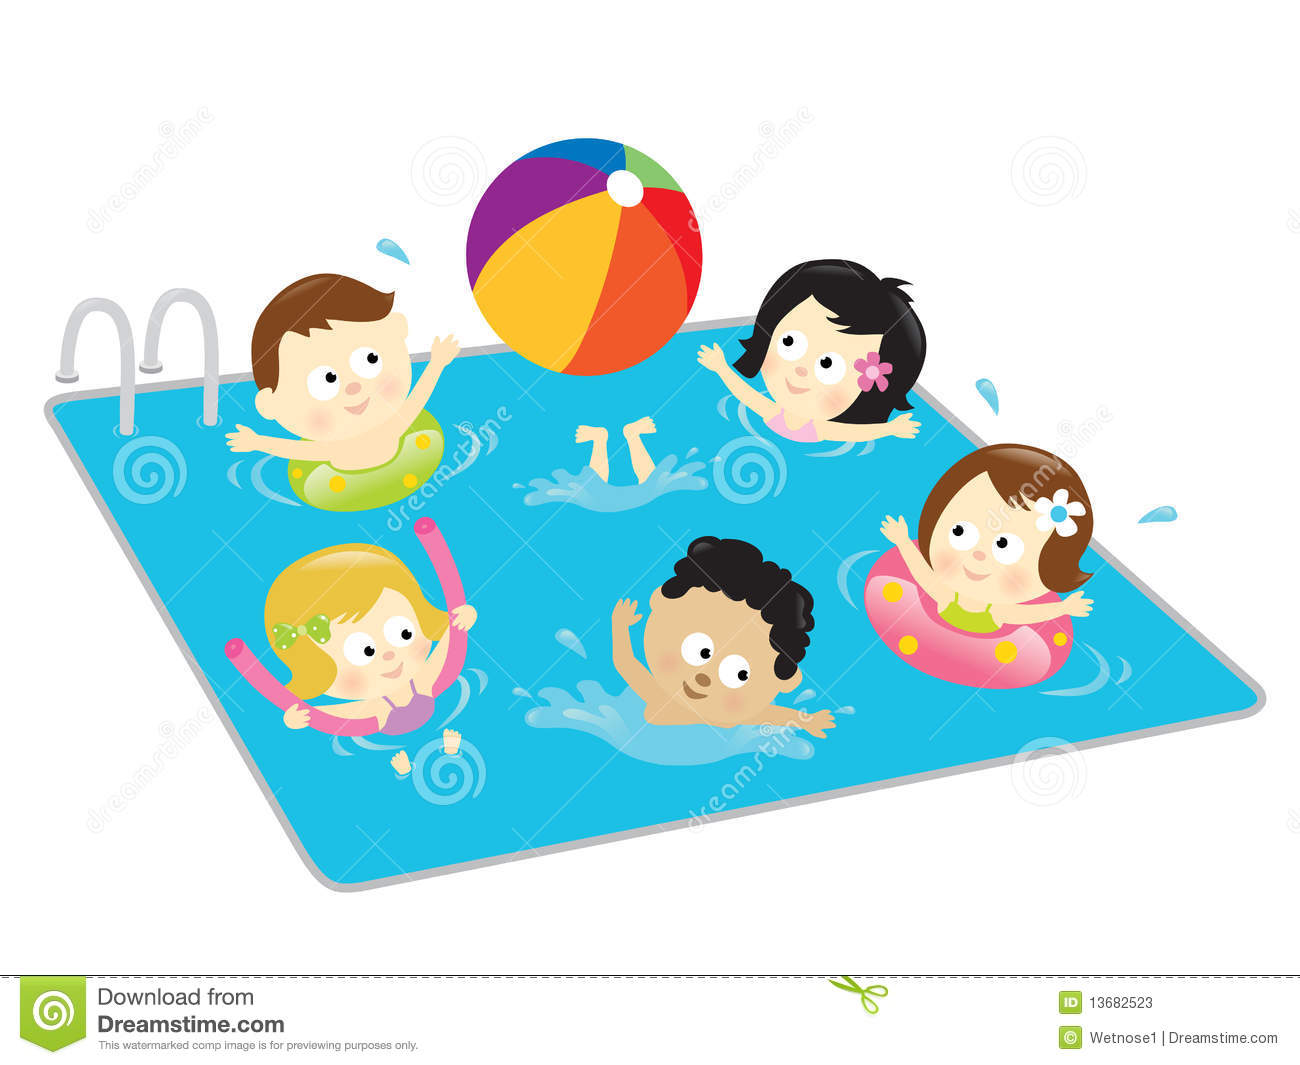 clipart children swimming pool